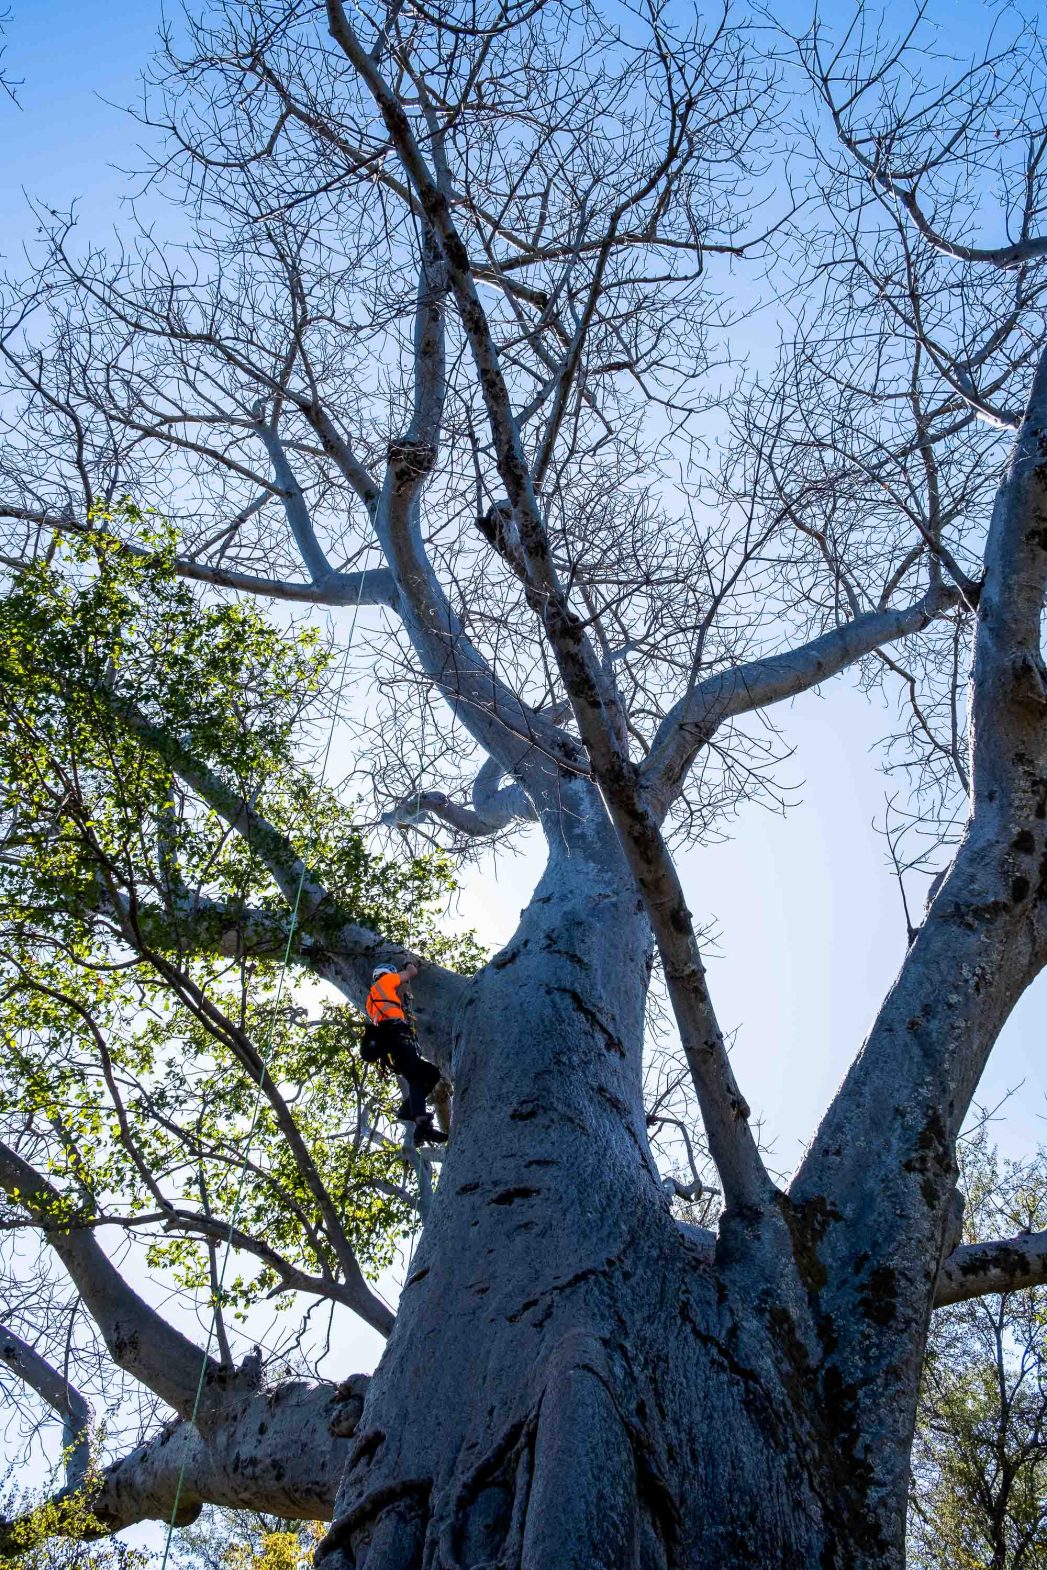 Jack climbing a baobab tree.